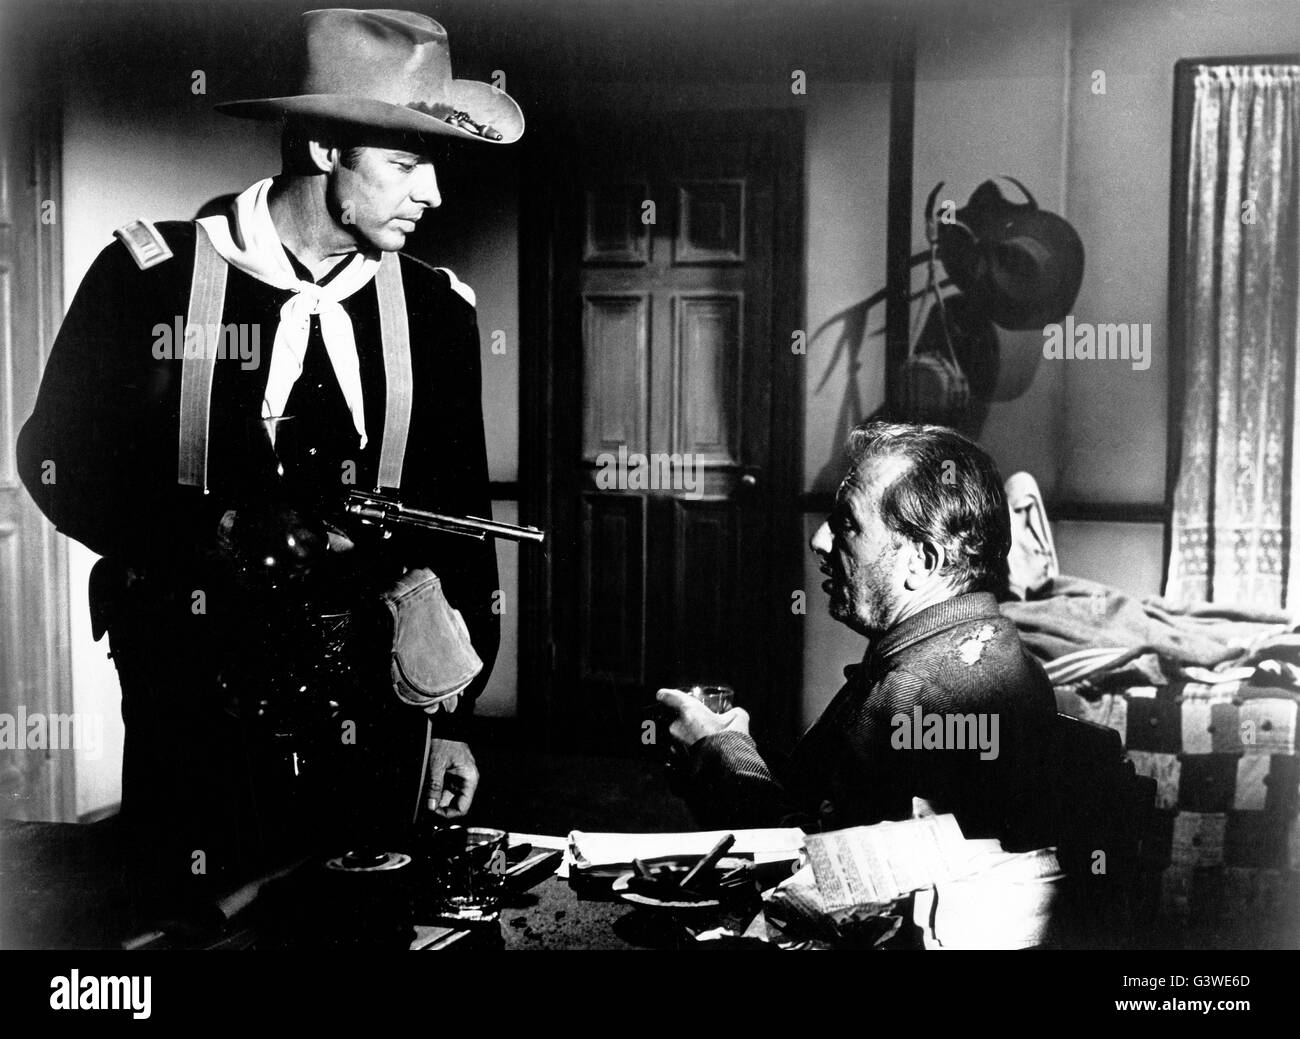 Apache Rifles, aka: Aufstand in Arizona, USA 1964, Regie: William Witney, Darsteller: Audie Murphy (links) Stock Photo